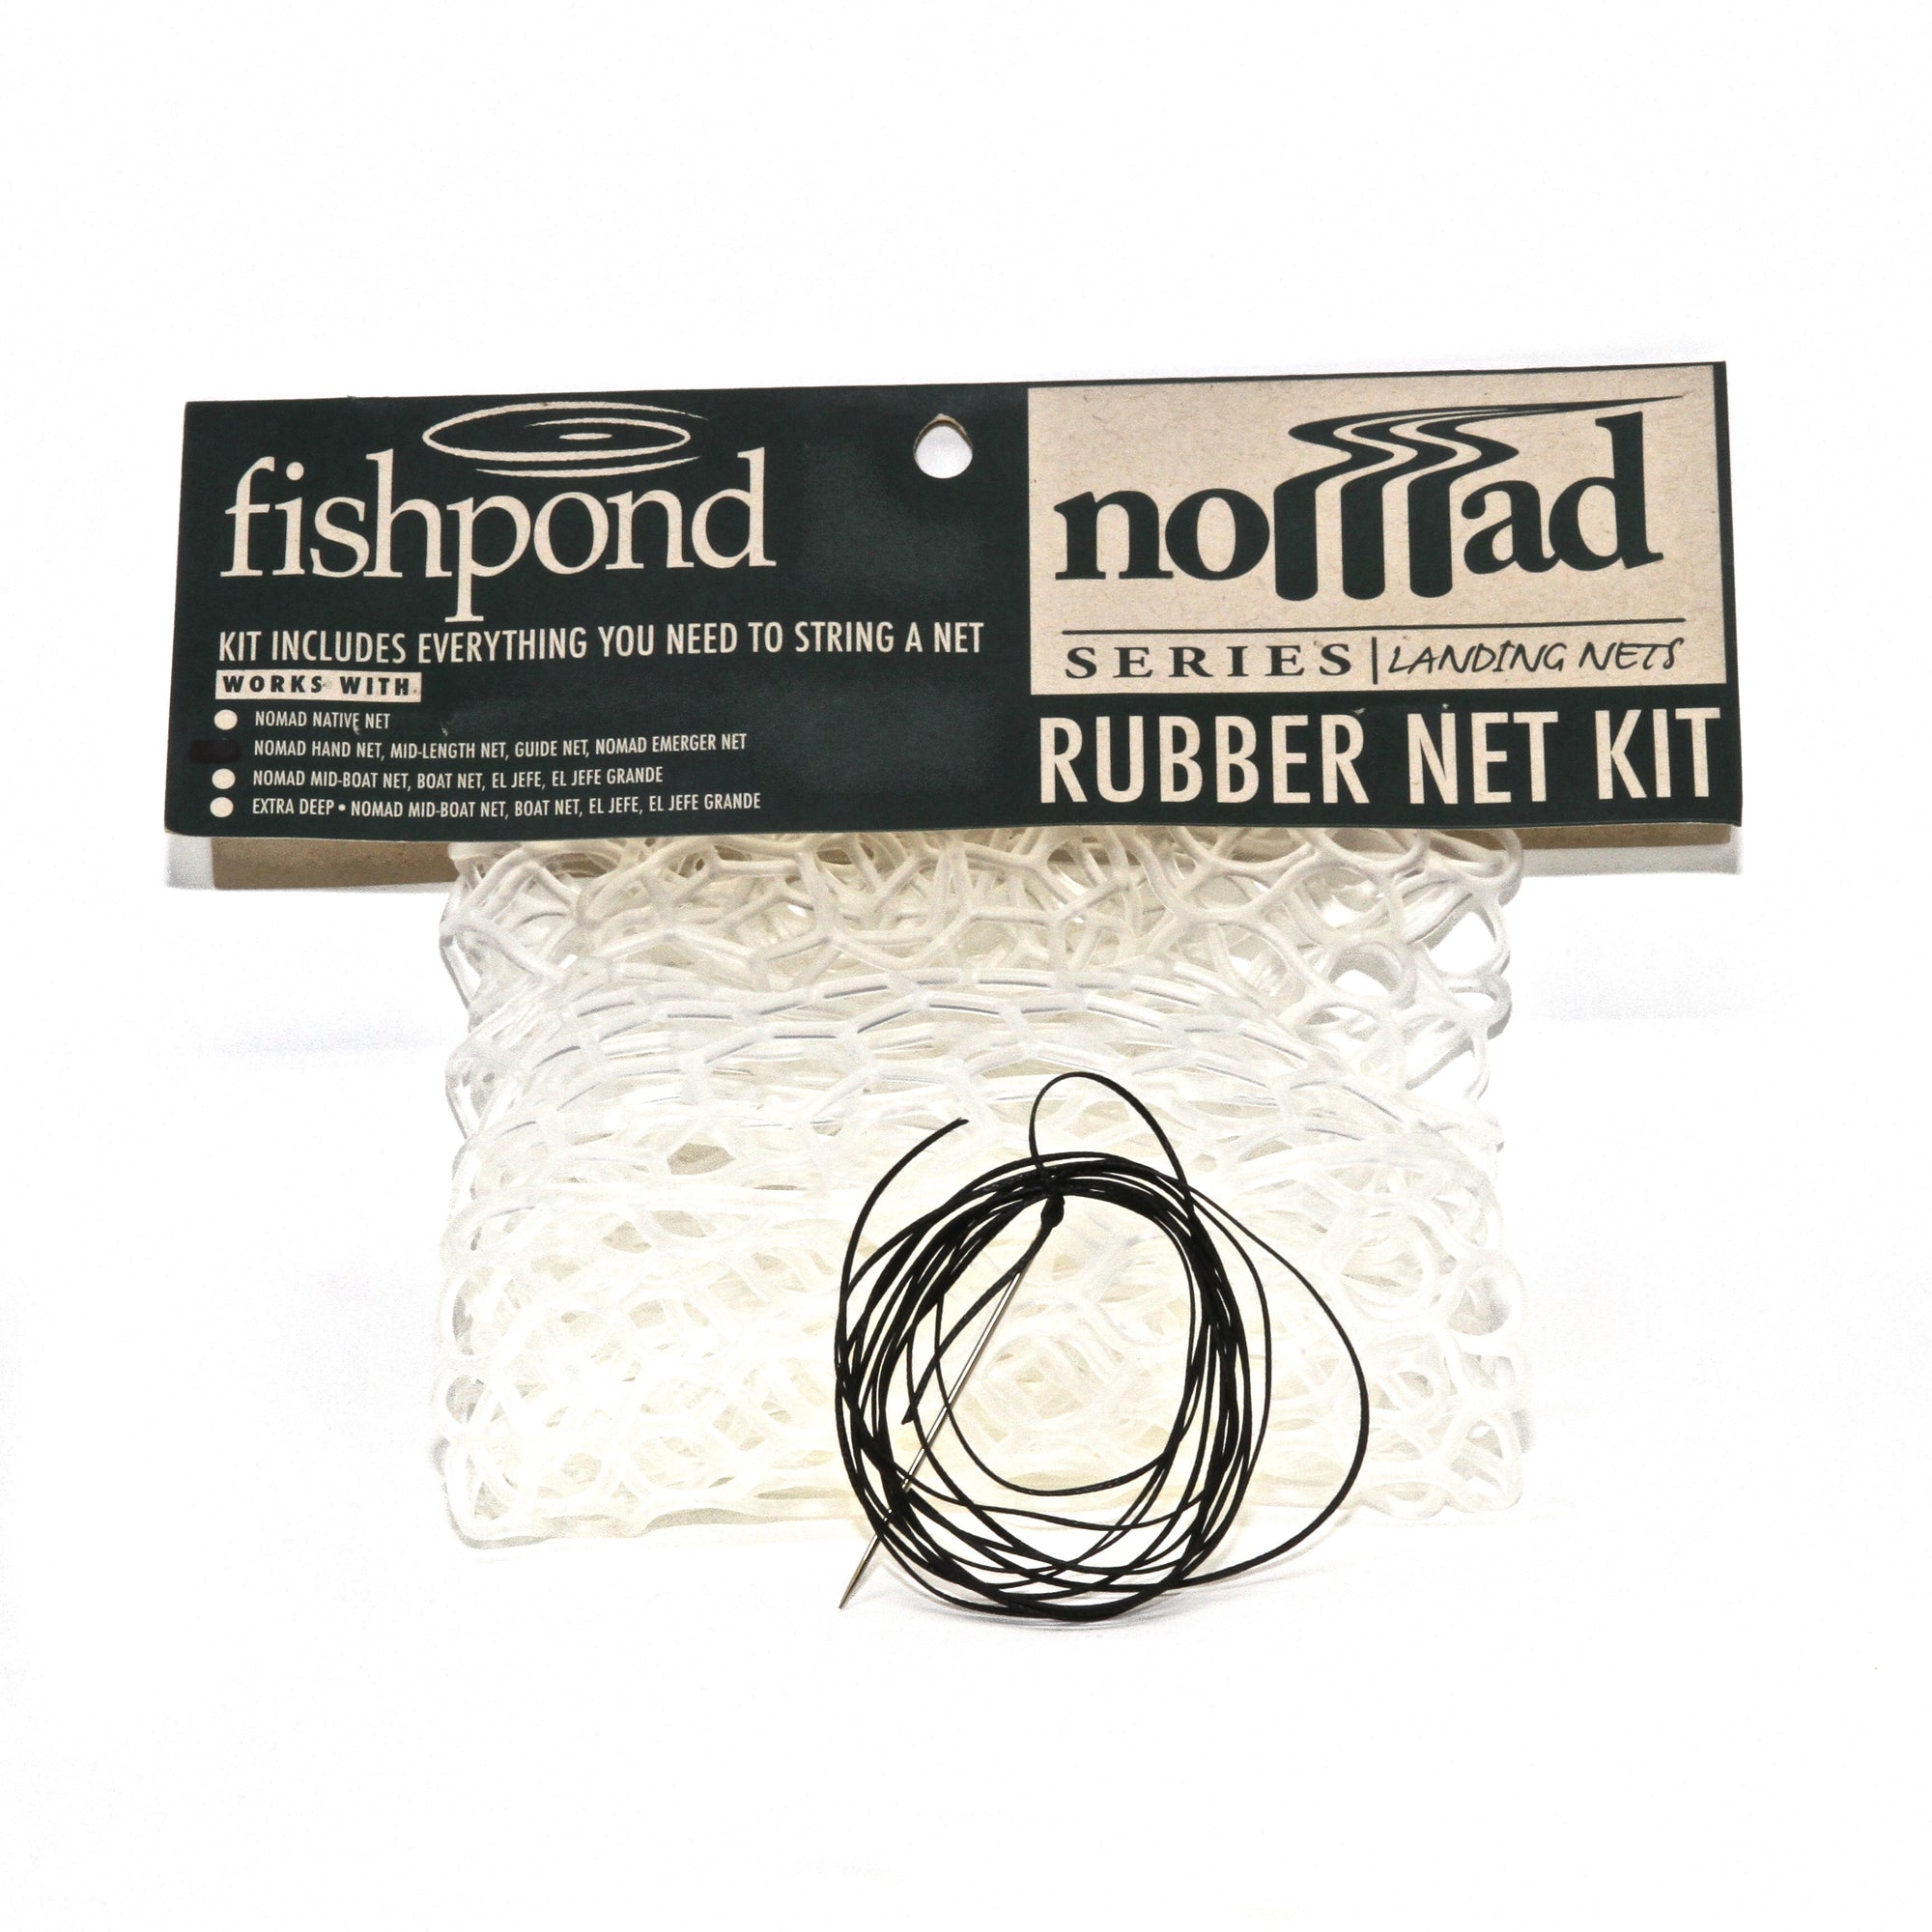 Fishing Net Replacement Netting, Large Replacement Fishing Net